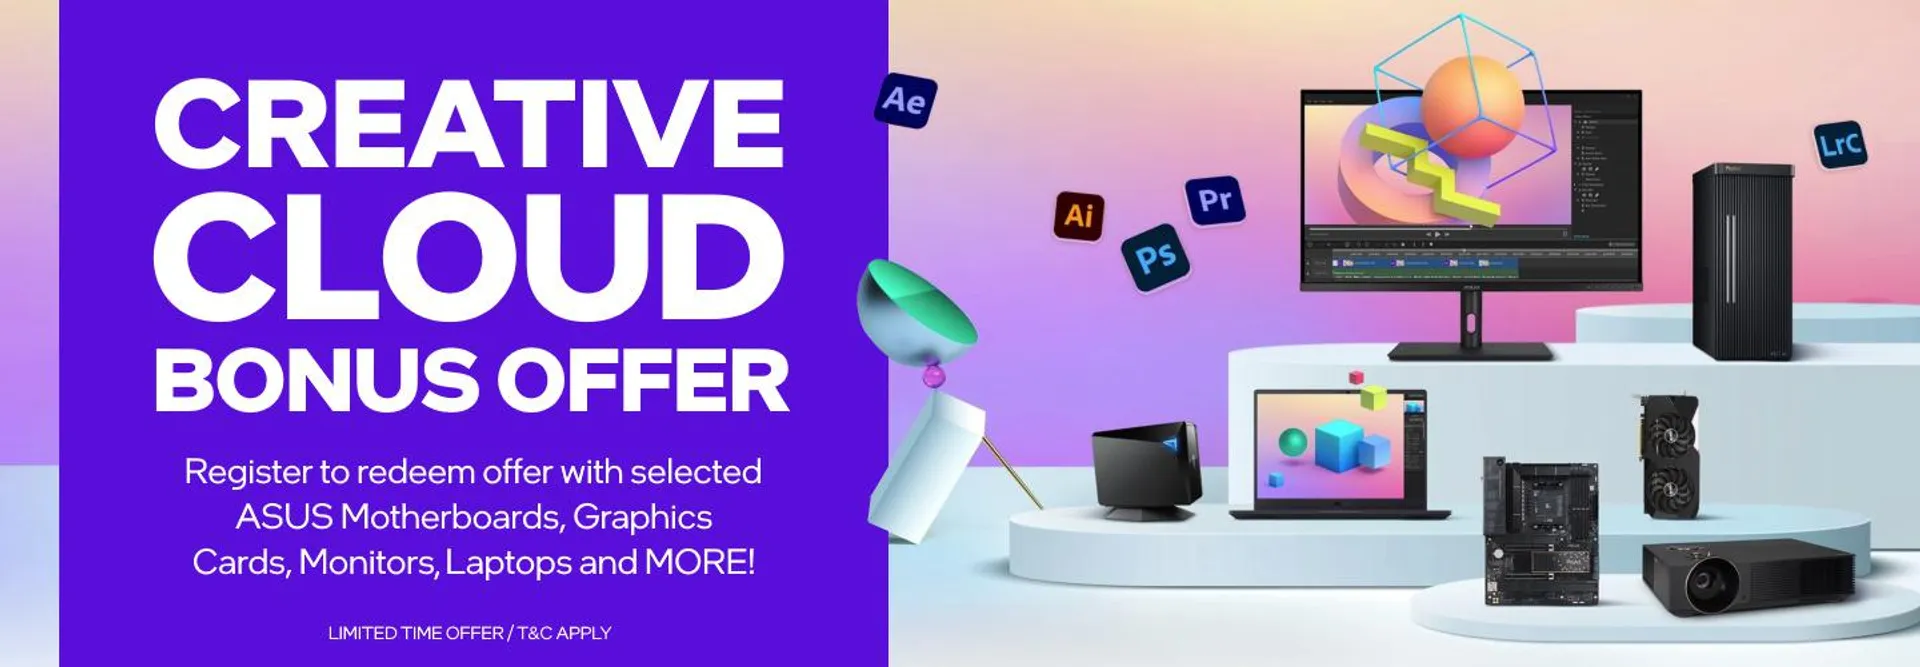 Asus Adobe Creative Cloud Bonus!